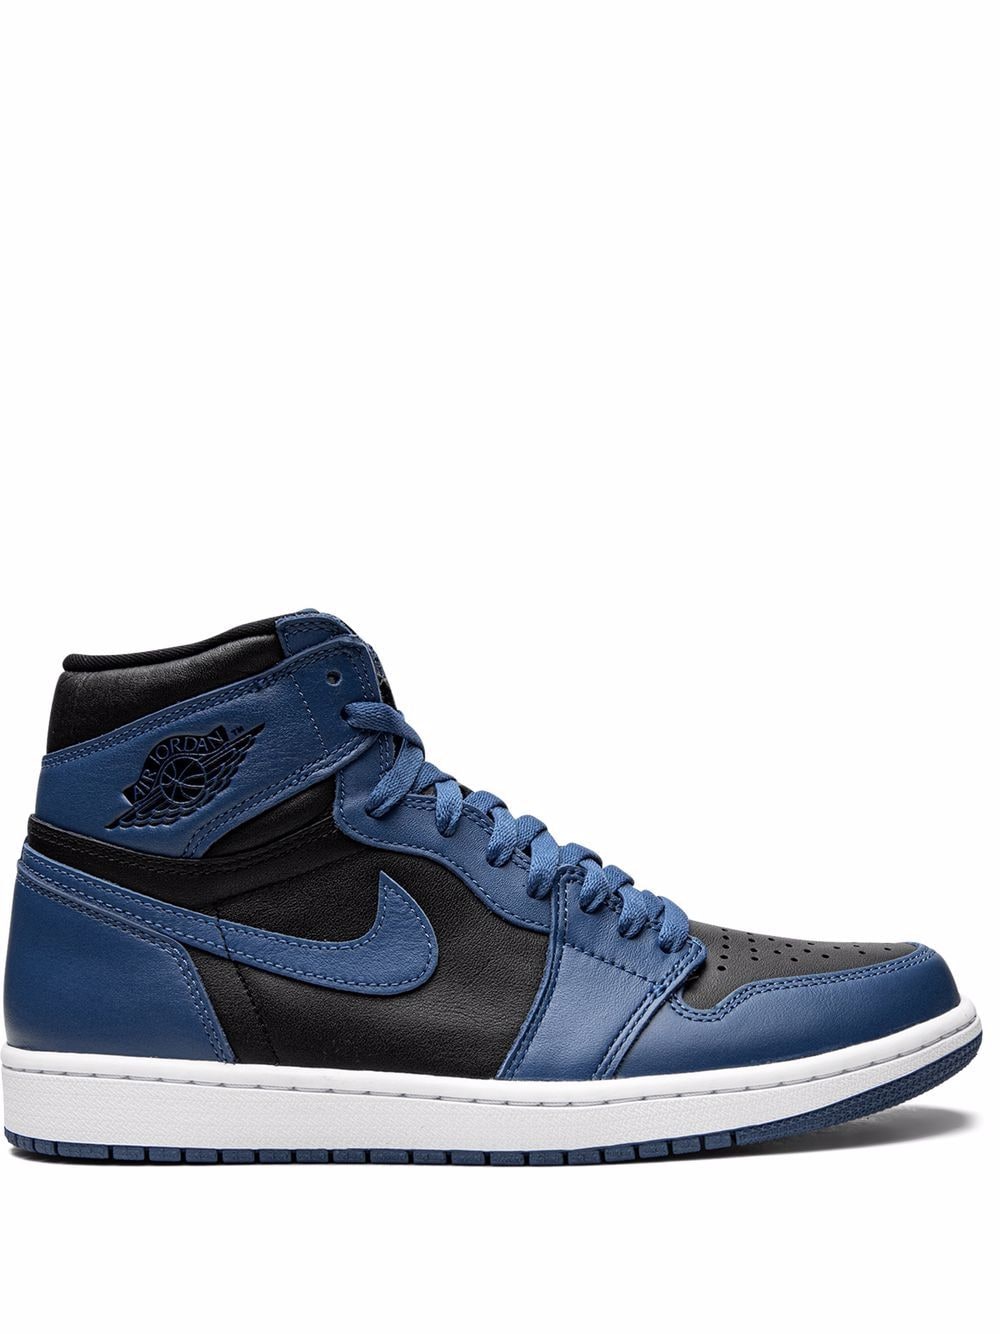 Nike Air Jordan 1 High OG Dark Marina Blue(Brand New)(Originals)(Pre-Orders Only)